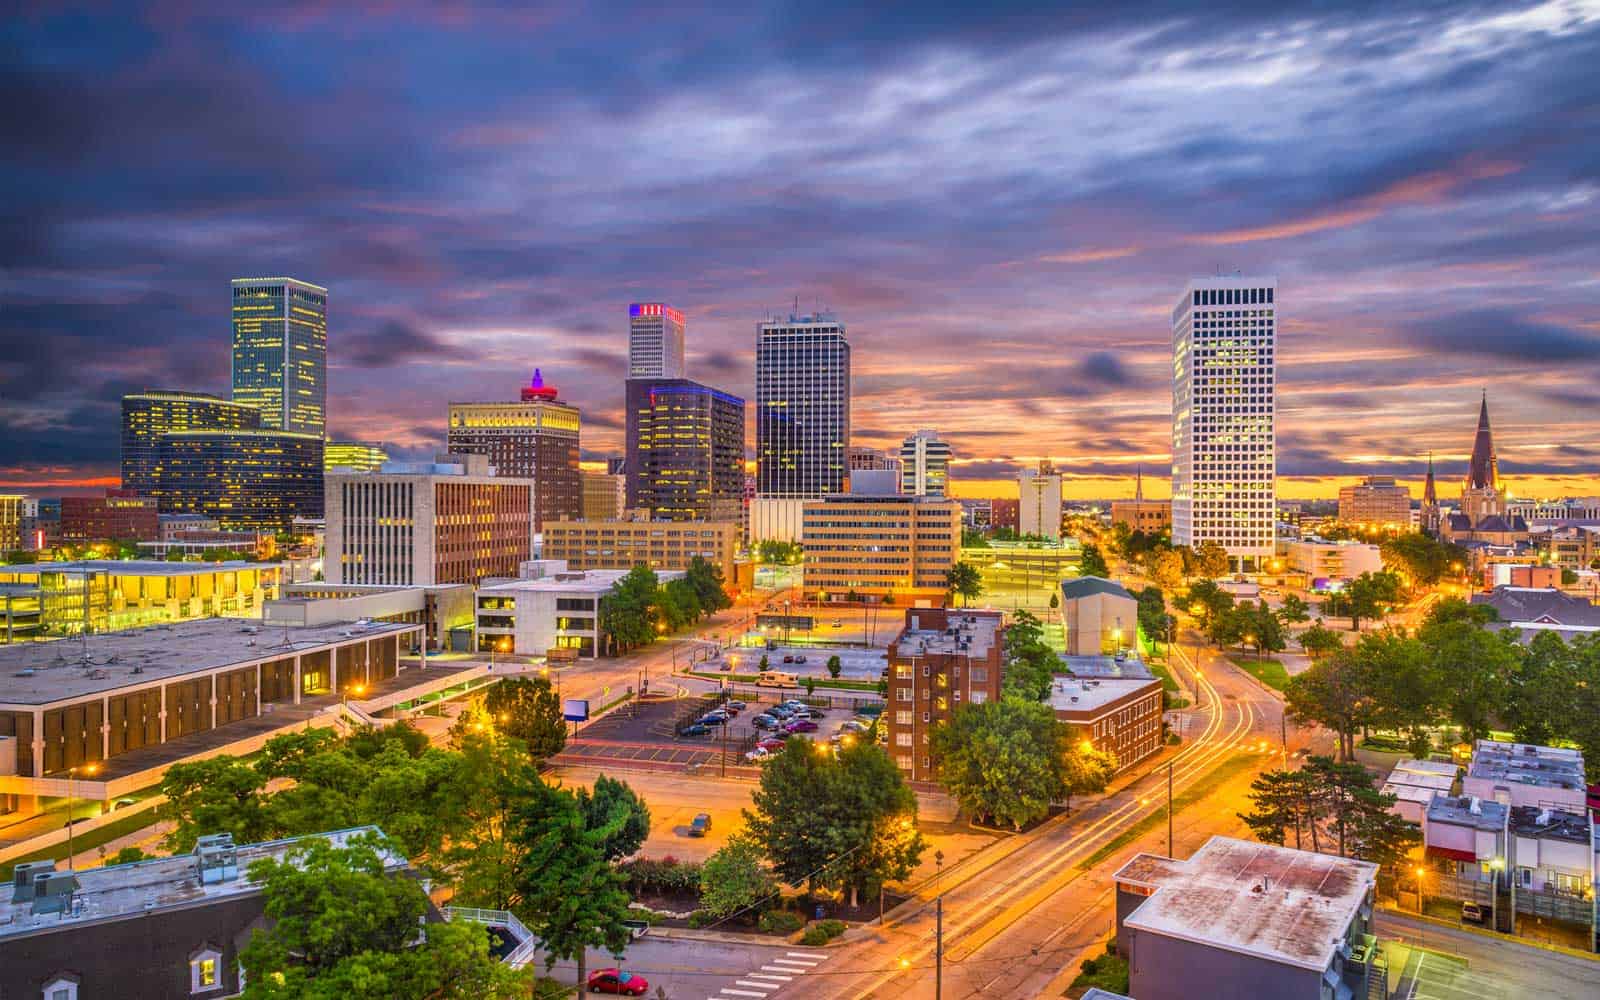 A photo of Tulsa Oklahoma during a sunset.